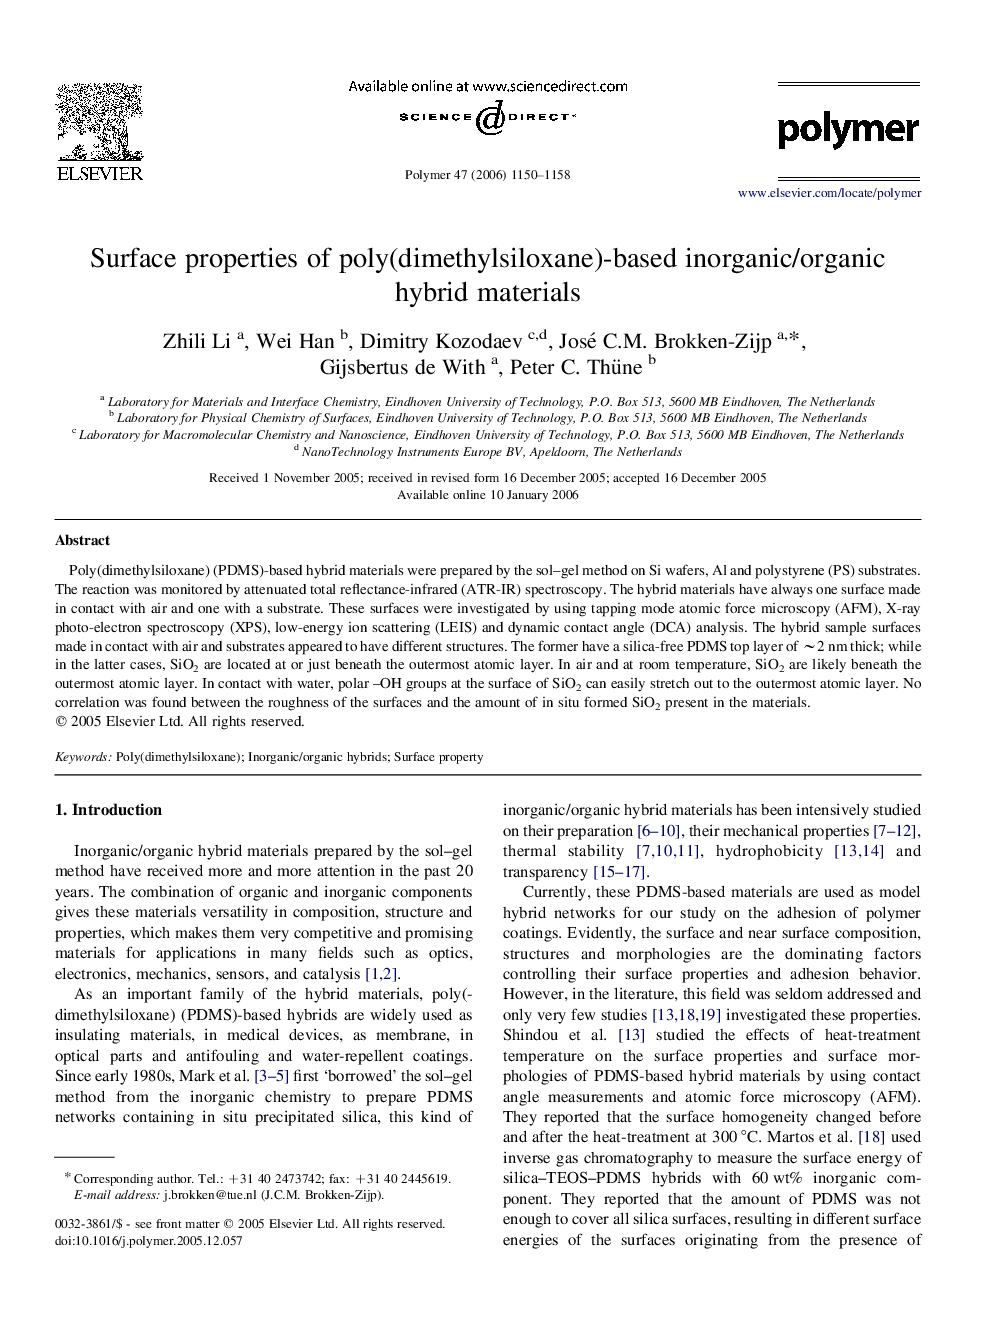 Surface properties of poly(dimethylsiloxane)-based inorganic/organic hybrid materials